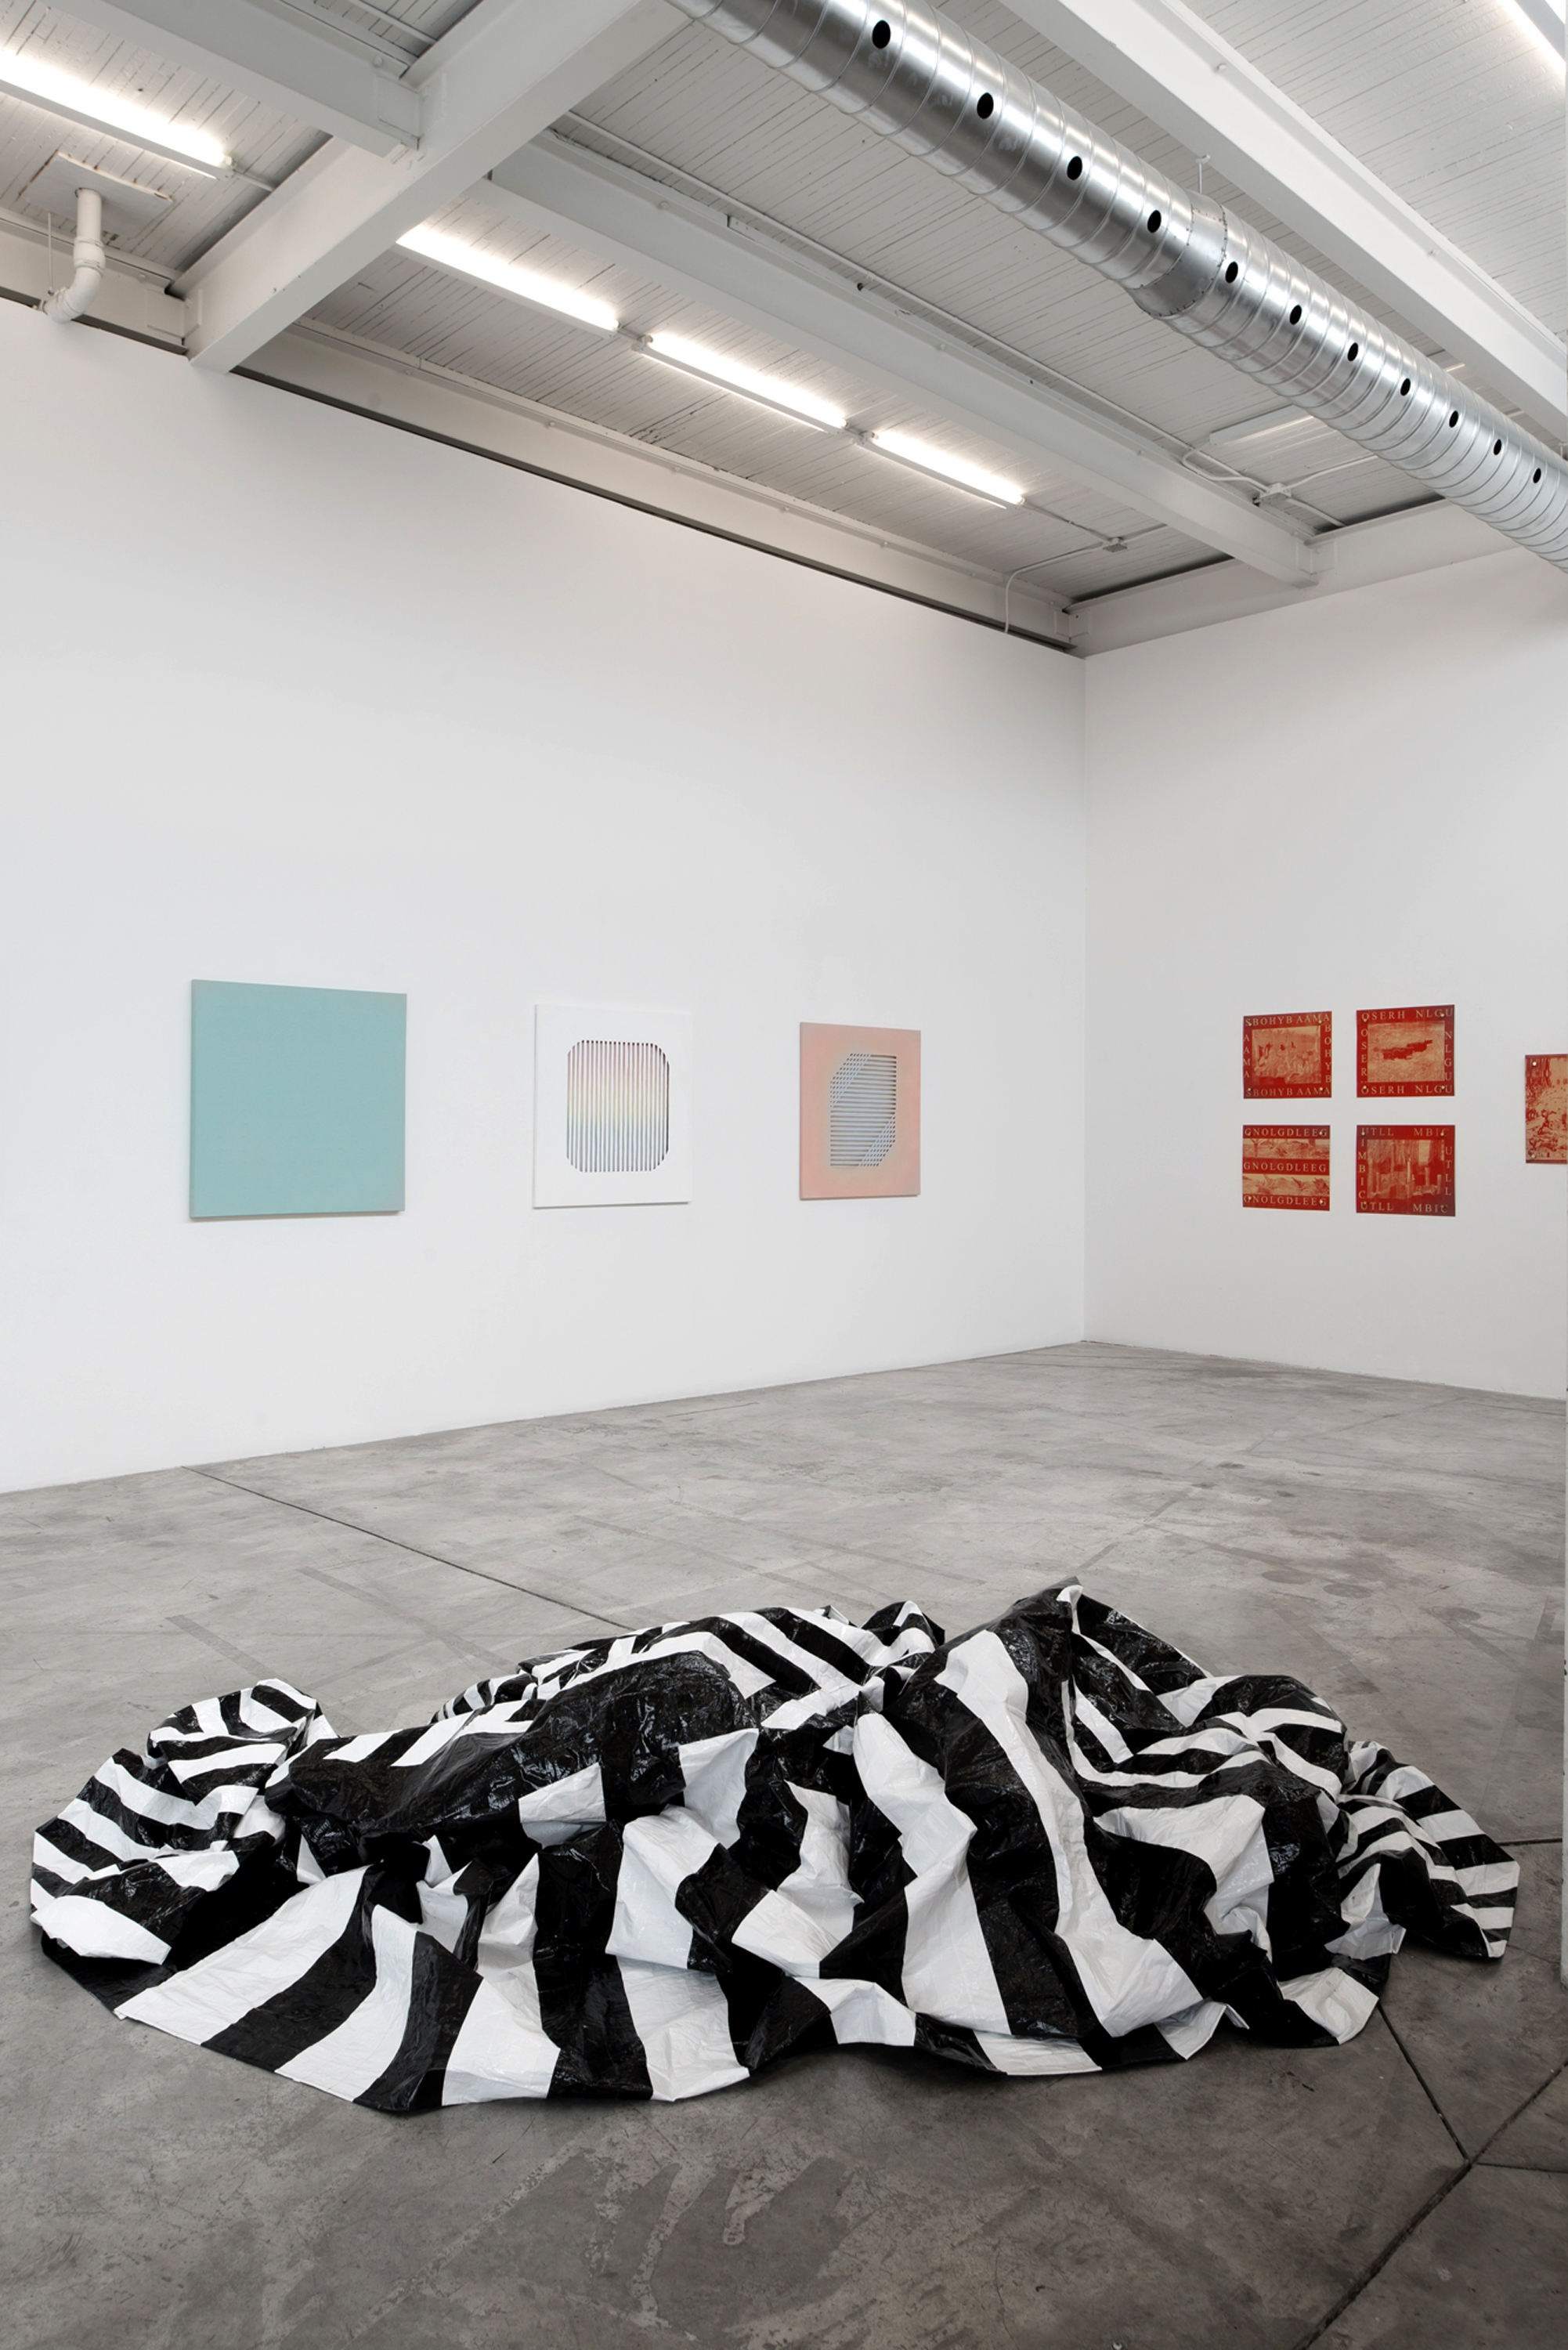   Derek Coulombe, Nestor Krüger, Kristie MacDonald, Janine Miedzik, Haley Uyeda    Installation view Diaz Contemporary  2016 